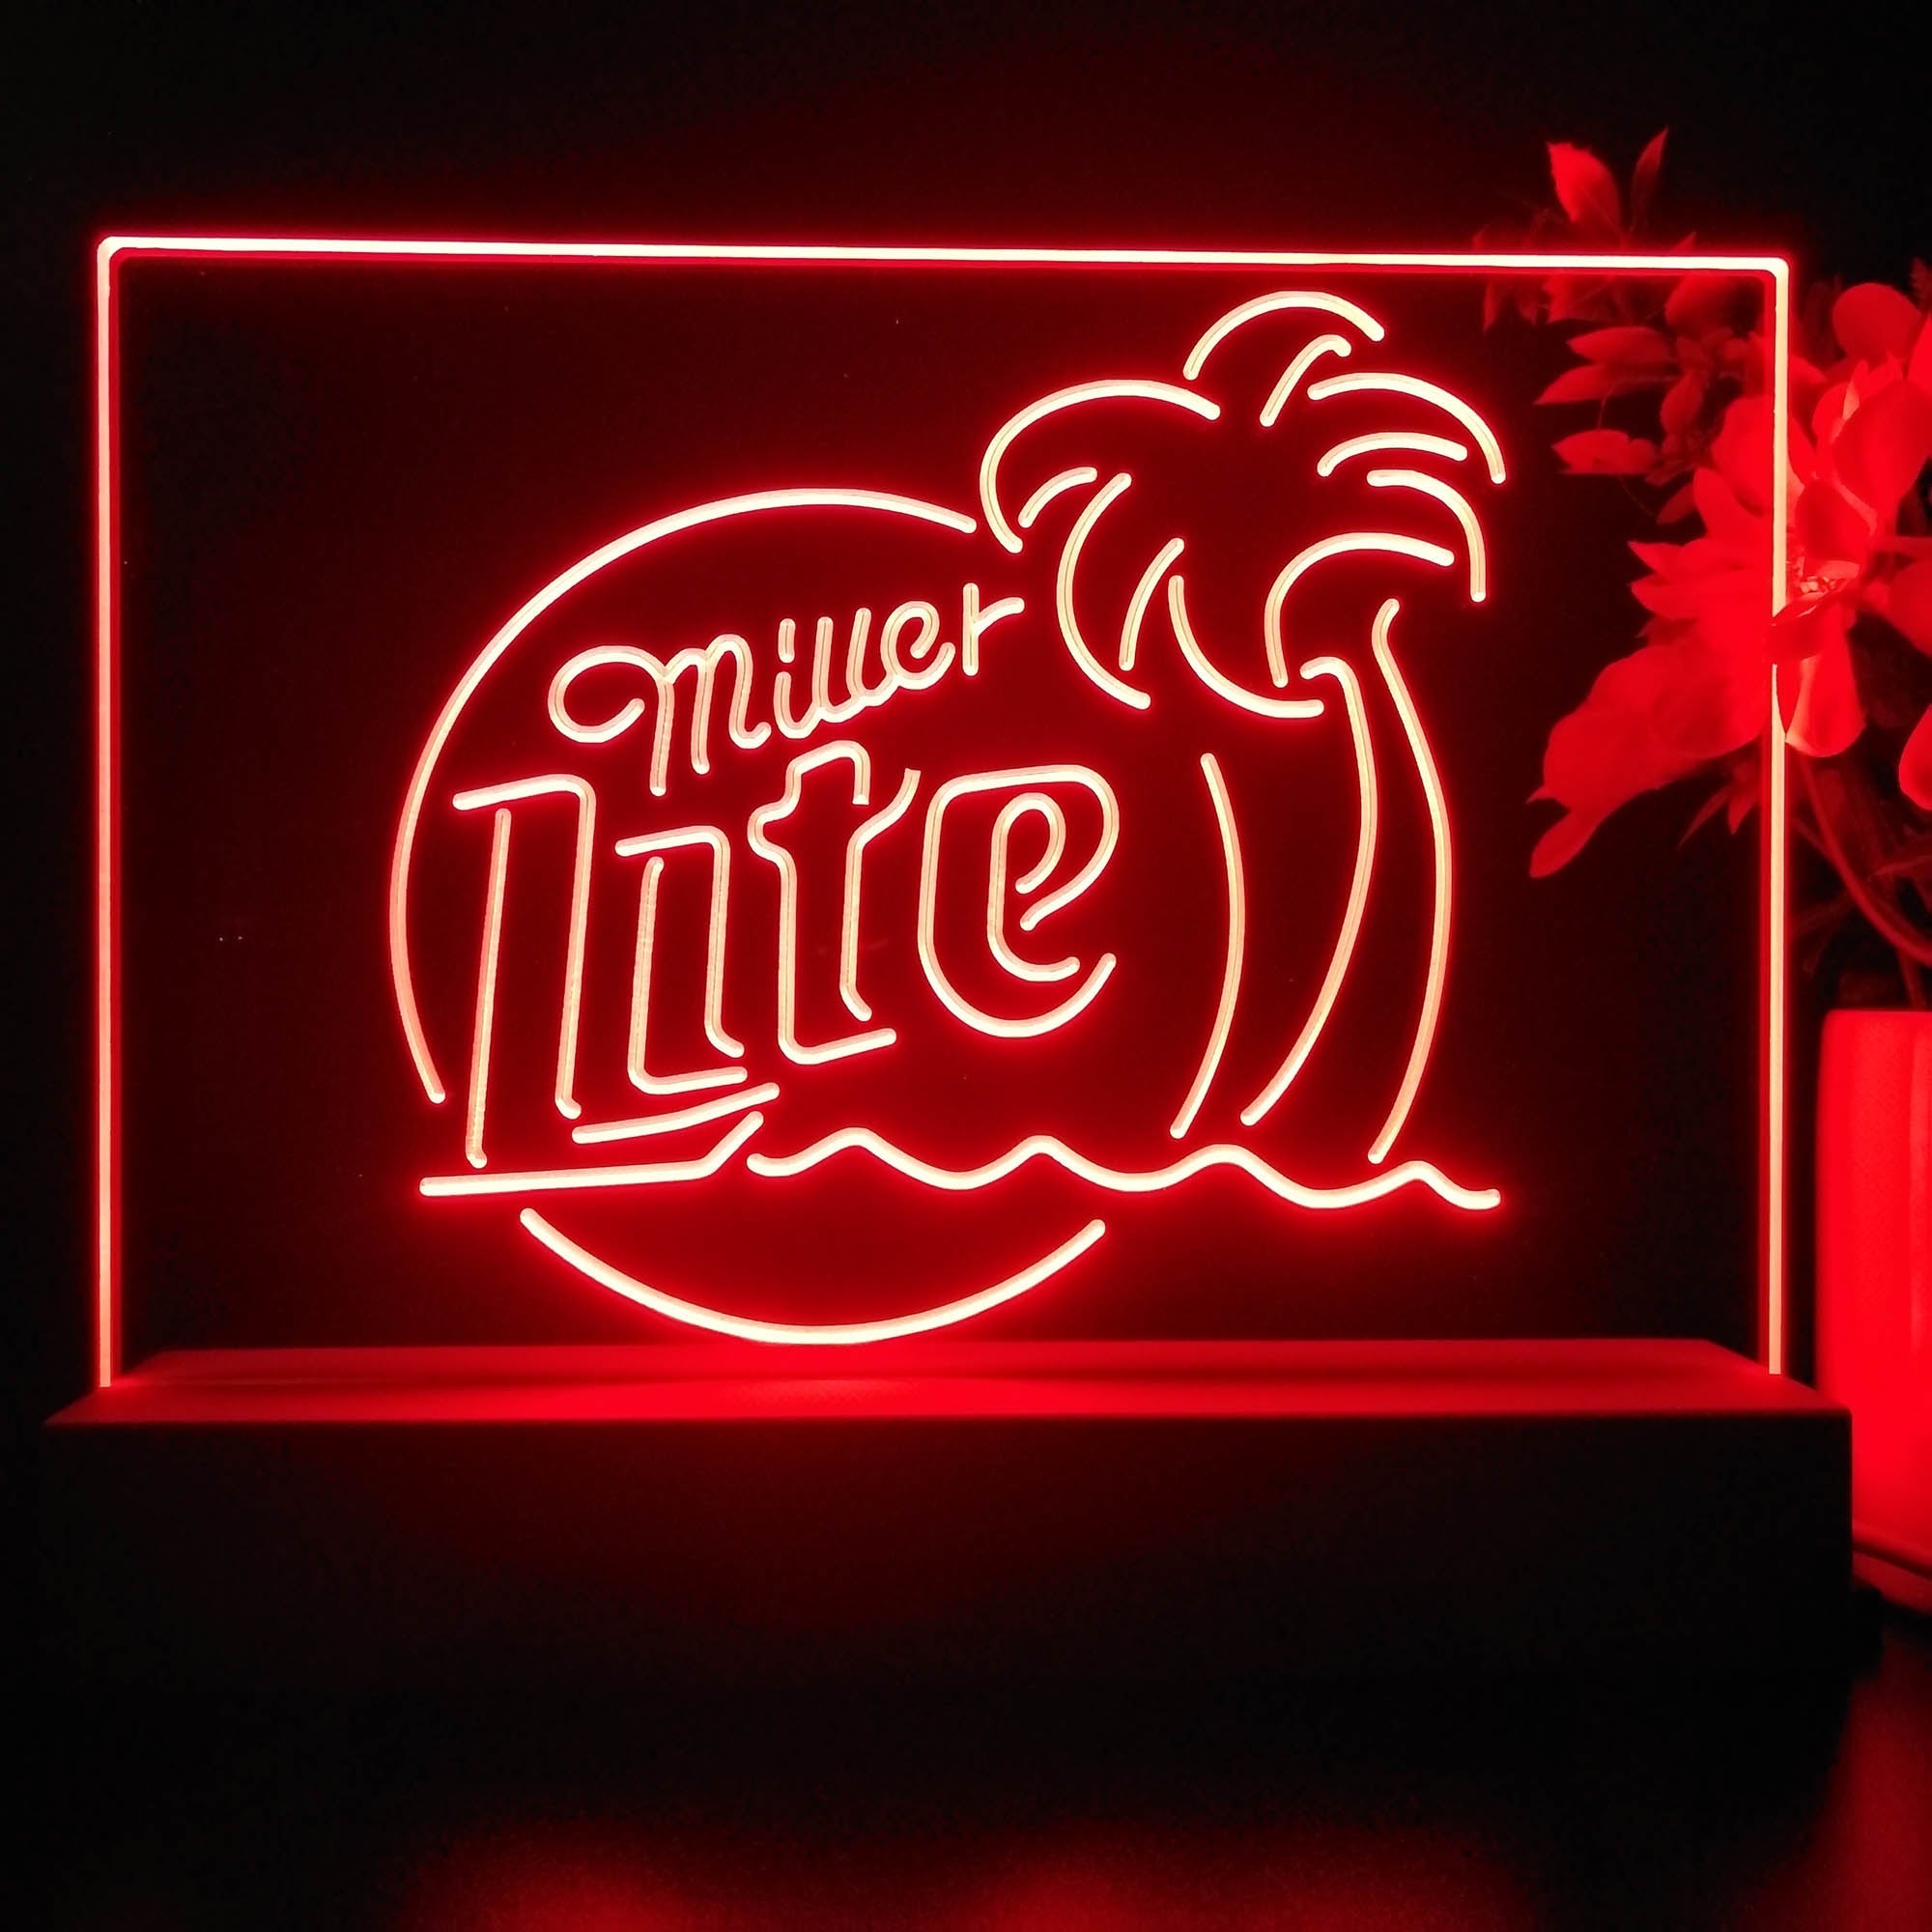 Miller Palm Tree Neon Sign Pub Bar Lamp